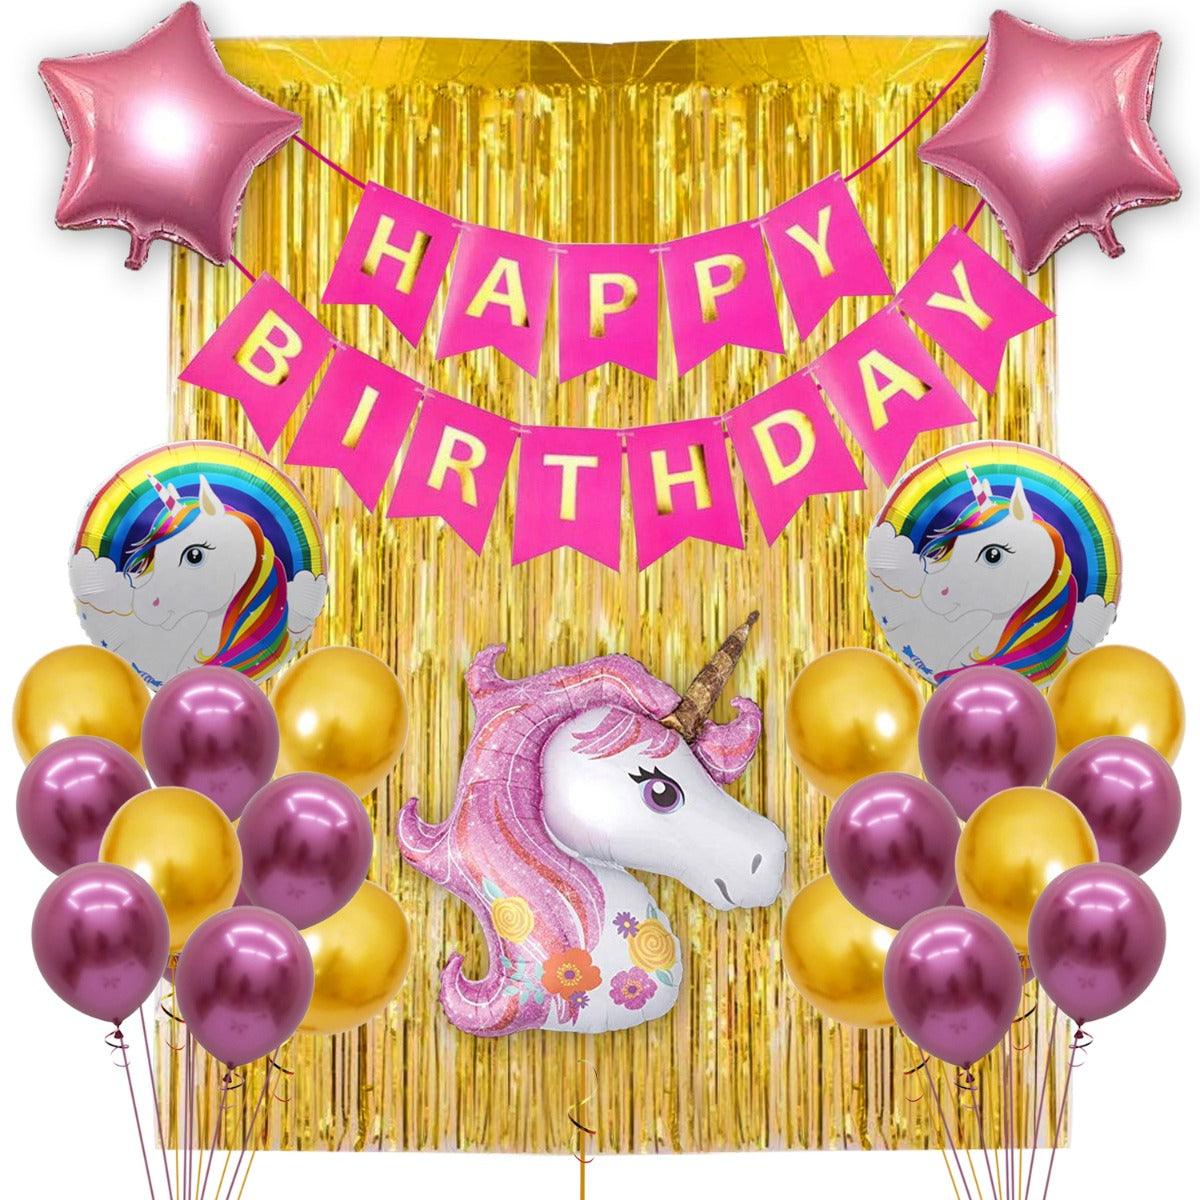 PartyCorp Happy Birthday Decoration Kit Combo Unicorn Theme 33 Pcs - Pink & Gold Chrome Balloons, Pink & Gold Happy Birthday Banner, Gold Curtain, Unicorn Theme Balloon Bouquet